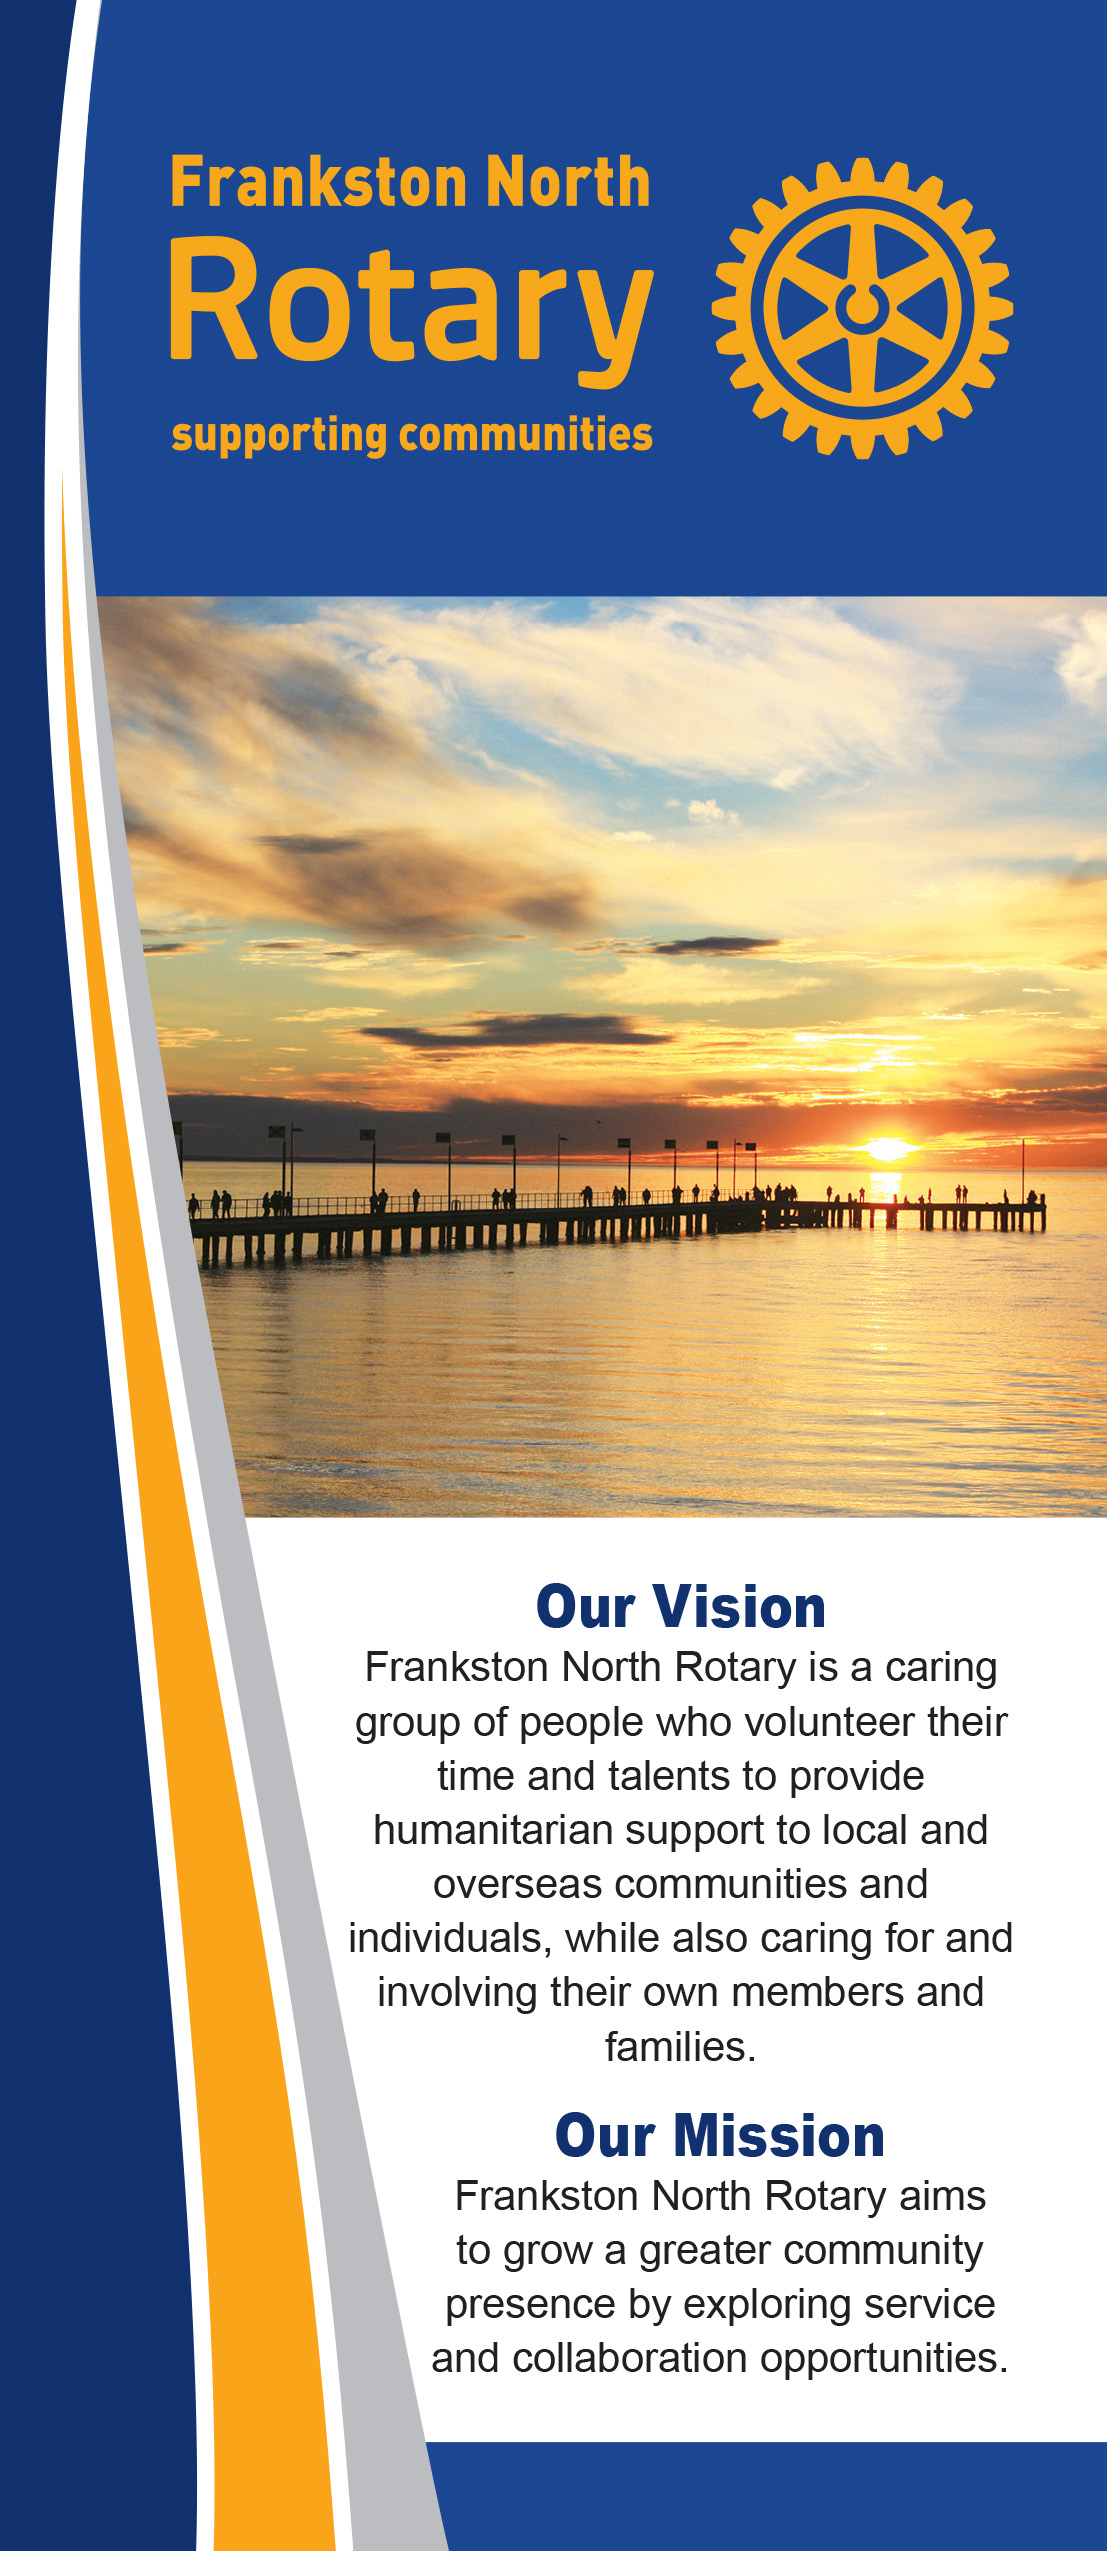 Introducing Frankston North Rotary